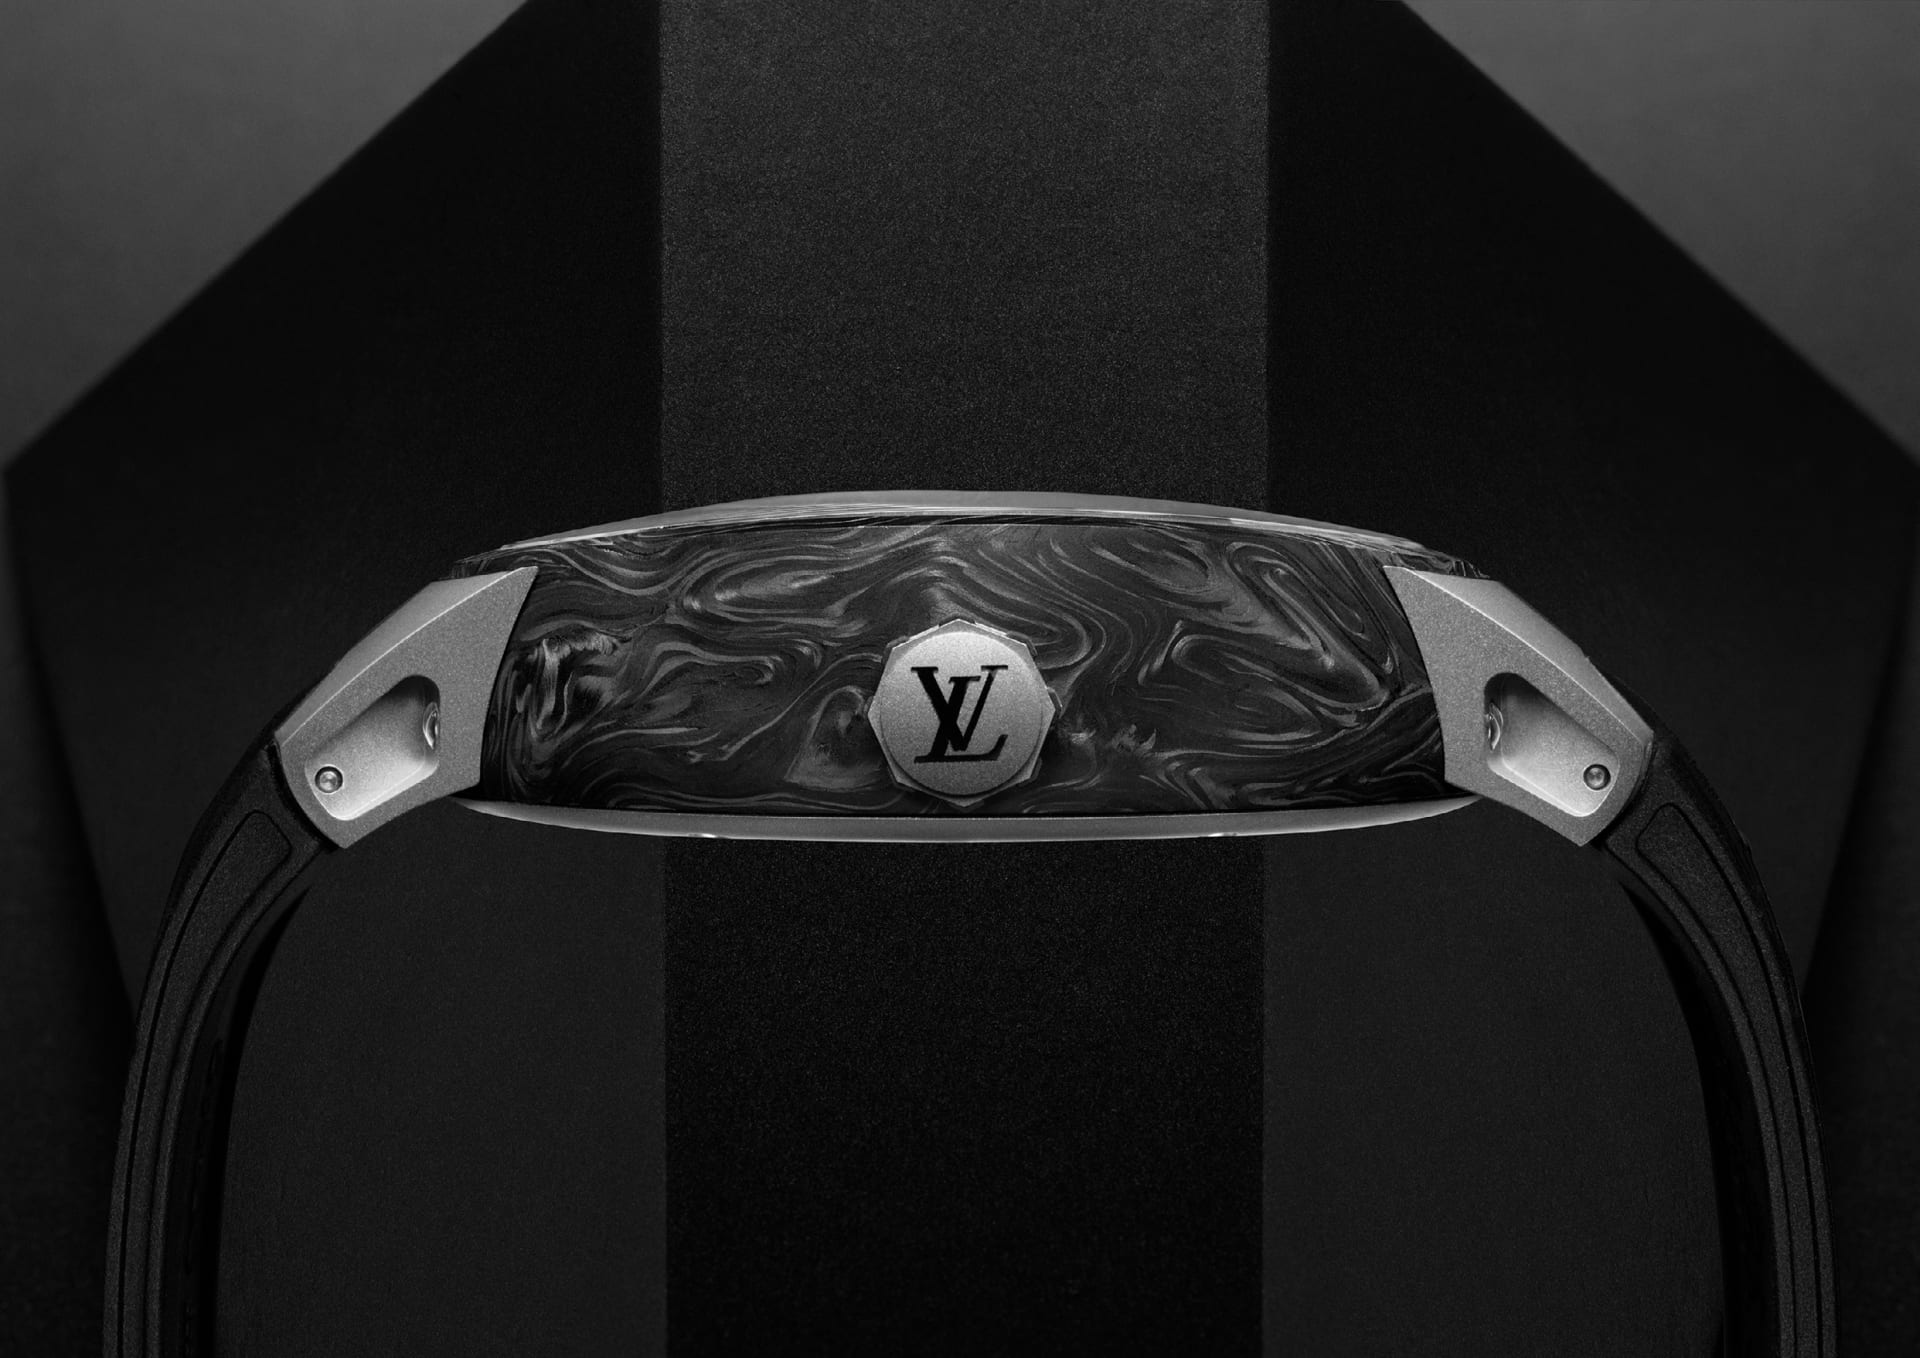 Louis Vuitton Introduces a Flying Tourbillon with Poinçon de